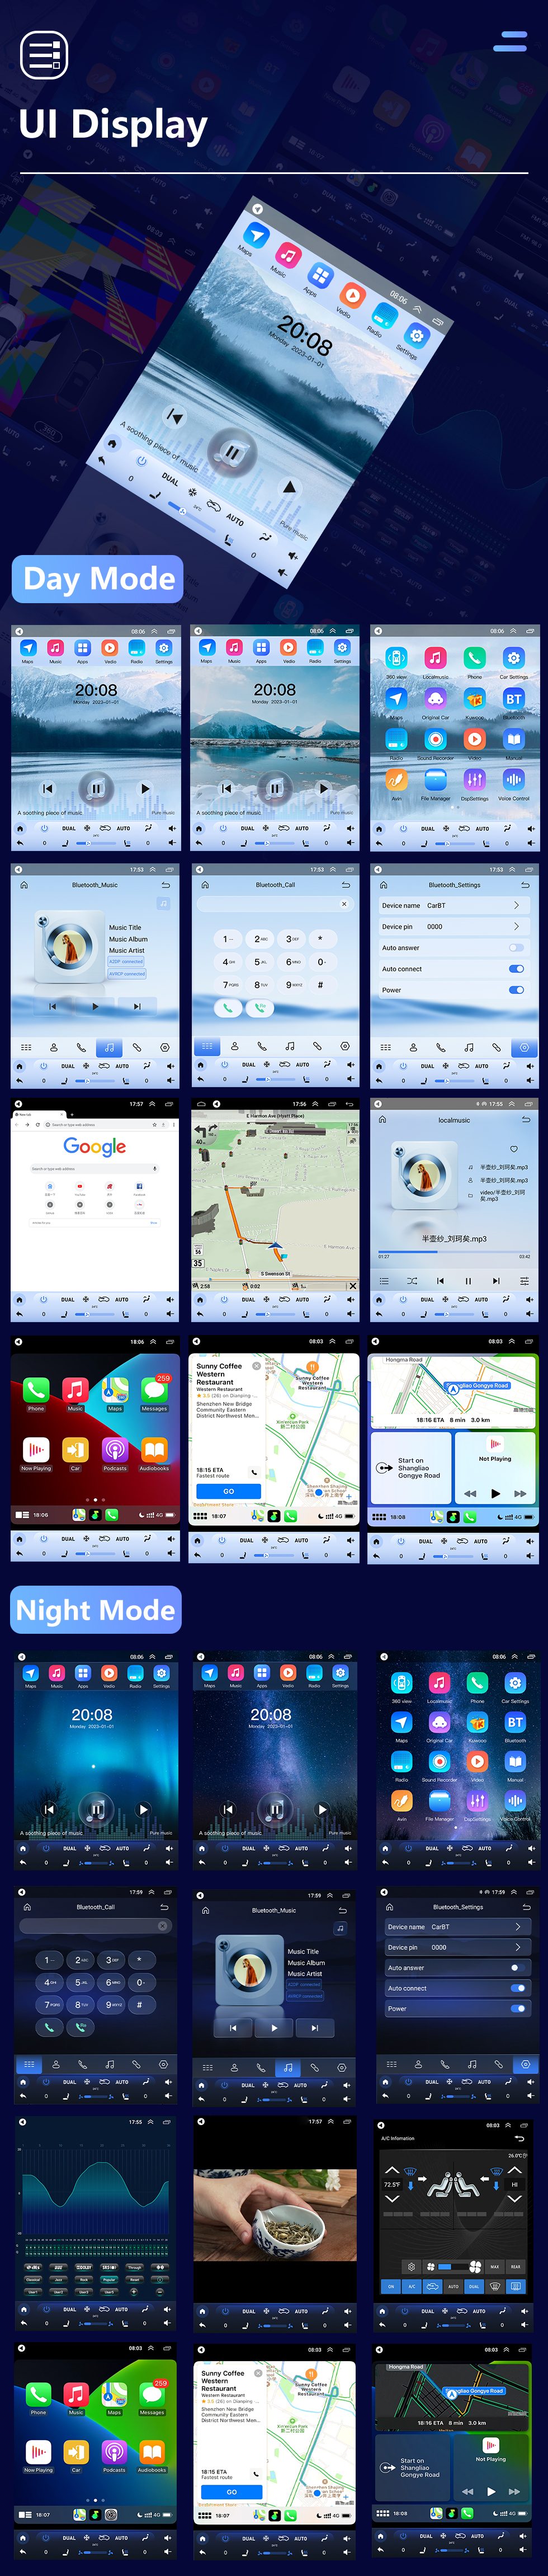 Seicane Carplay OEM 10.4 pulgadas Android 10.0 para 2014 2015-2017 Jeep SRT Radio Android Auto Sistema de navegación GPS con pantalla táctil HD Soporte Bluetooth OBD2 DVR